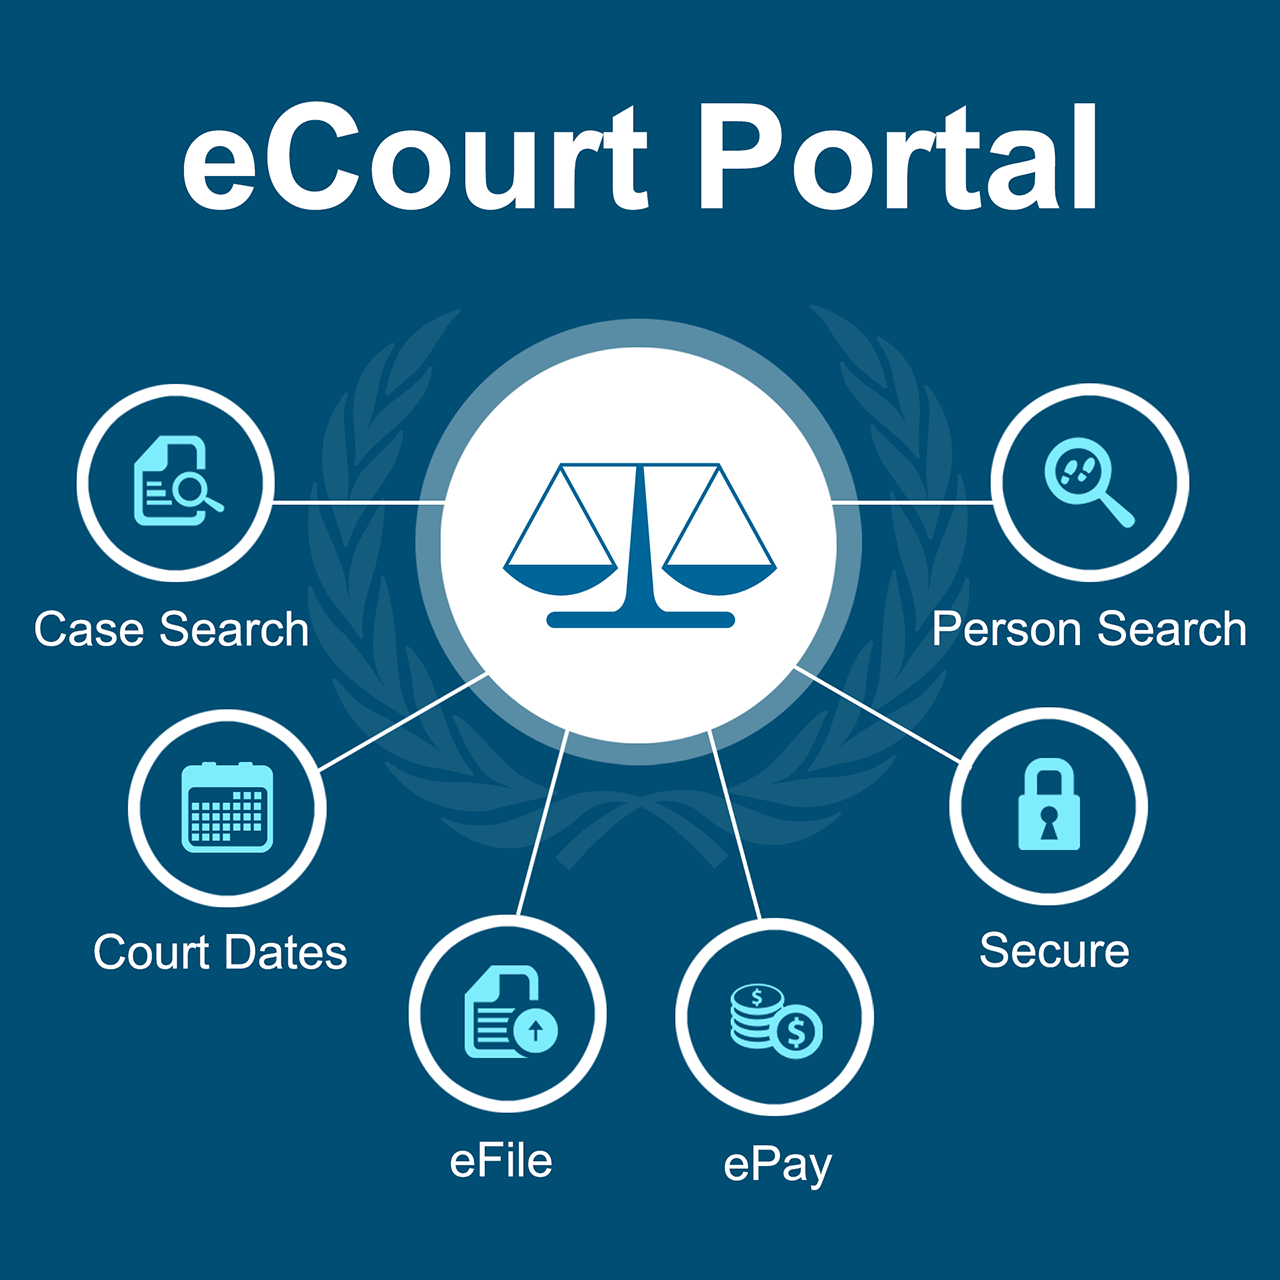 eCourt Portal